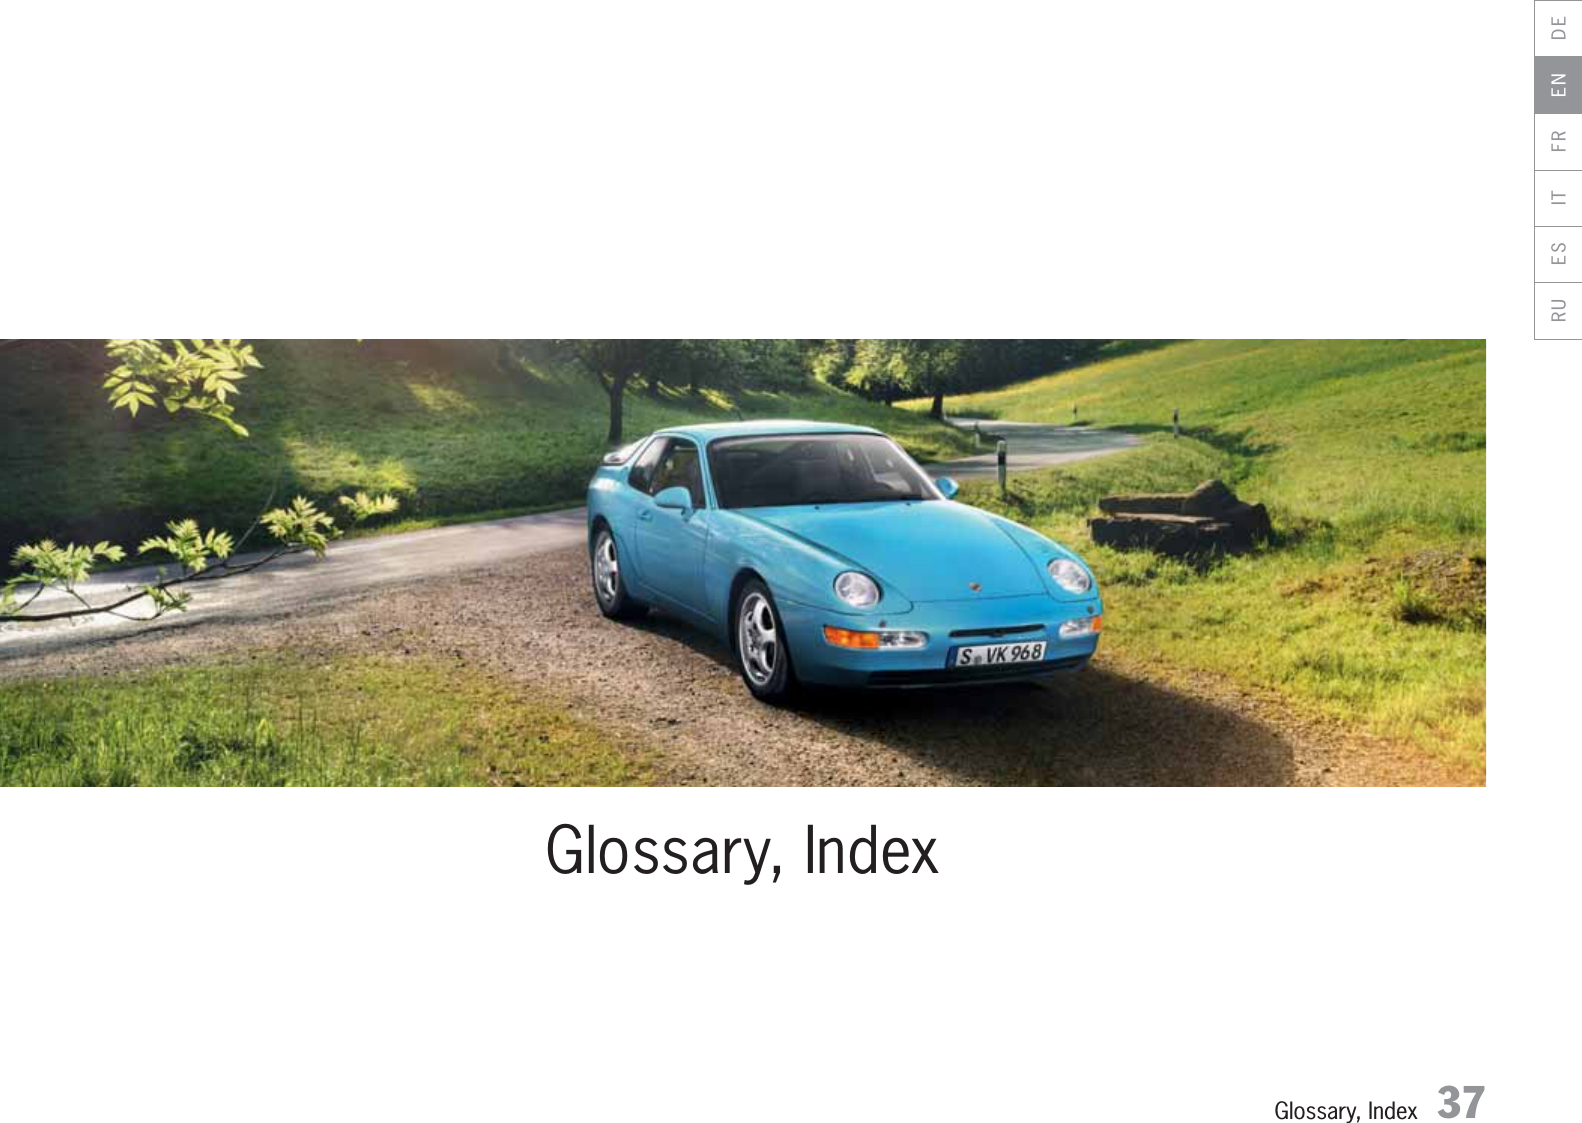 Glossary, Index 37Glossary, IndexDEENFRITESRU